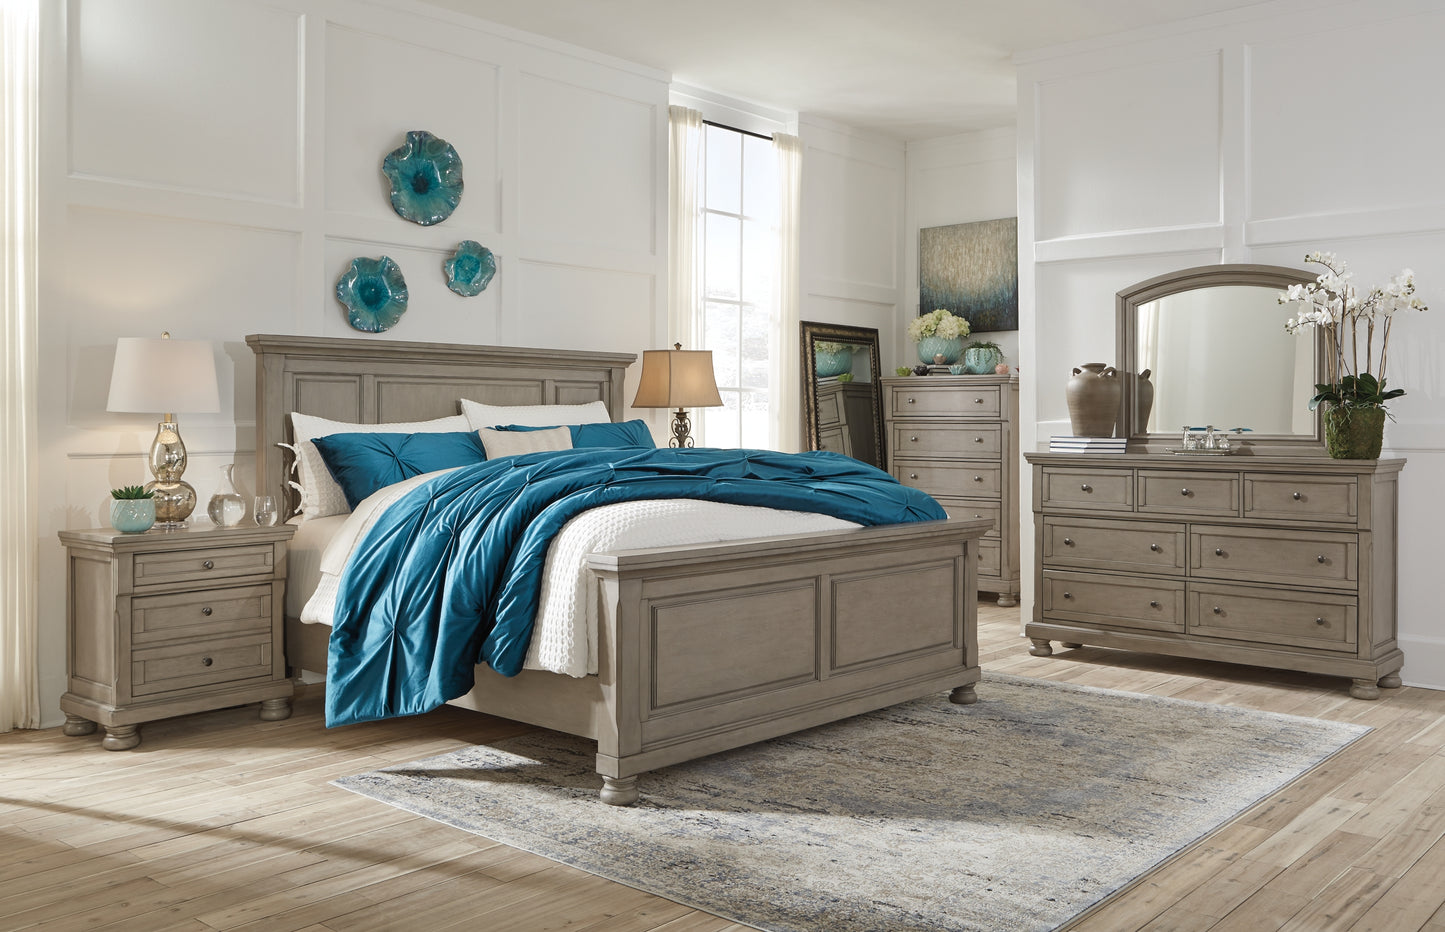 Lettner Queen Panel Bed with Dresser JB's Furniture  Home Furniture, Home Decor, Furniture Store